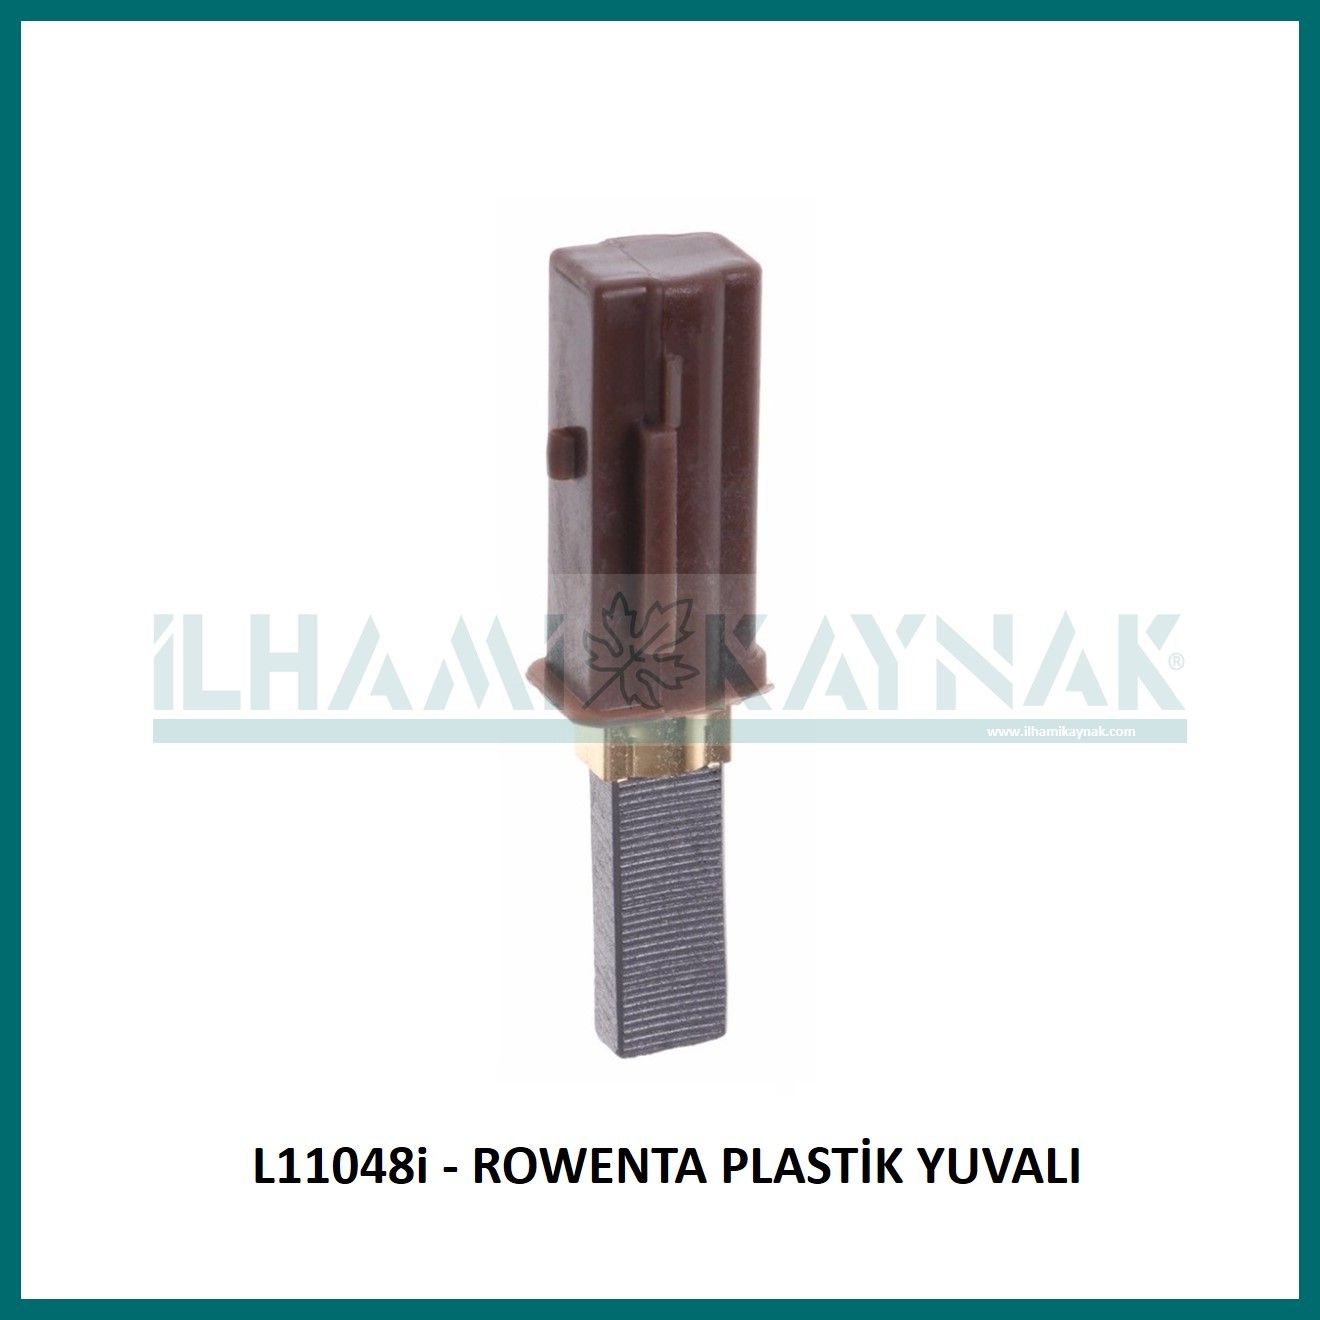 L11048i - ROWENTA PLASTİK YUVALI - 6.3*11*32 mm - Minimum Satın Alım: 10 Adet